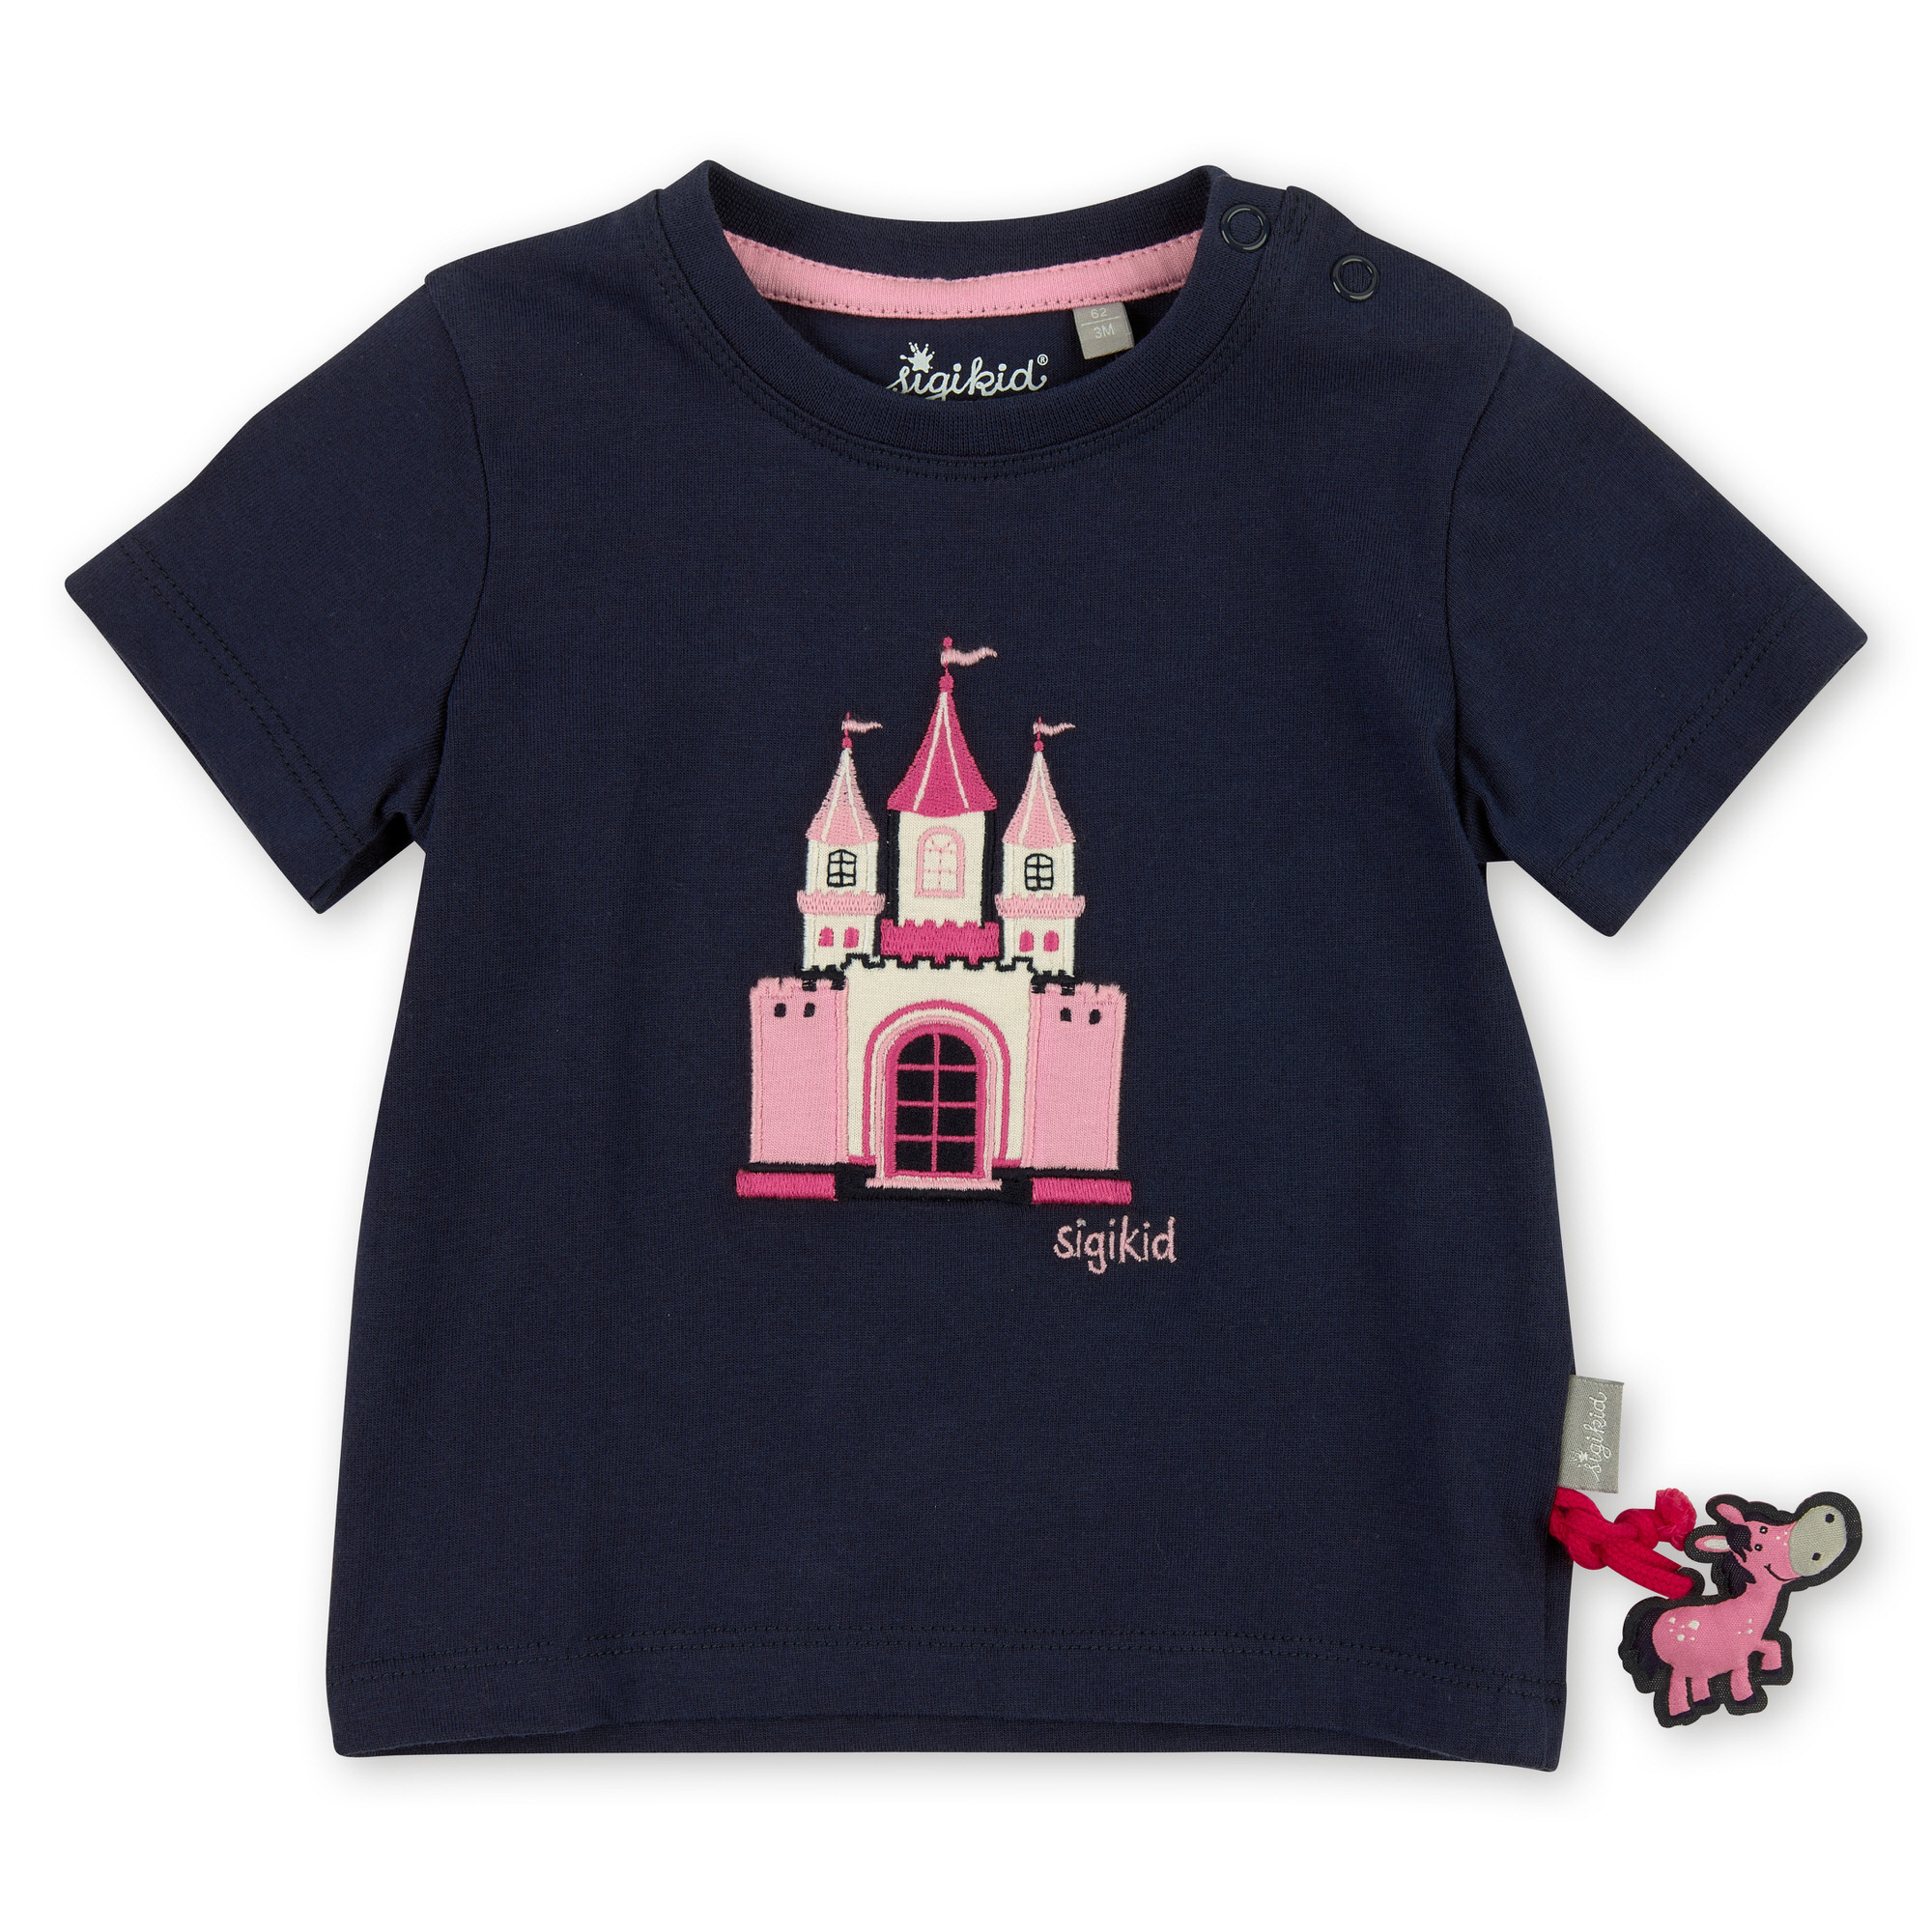 Dunkelblaues Baby T-Shirt mit Märchenschloss Motiv